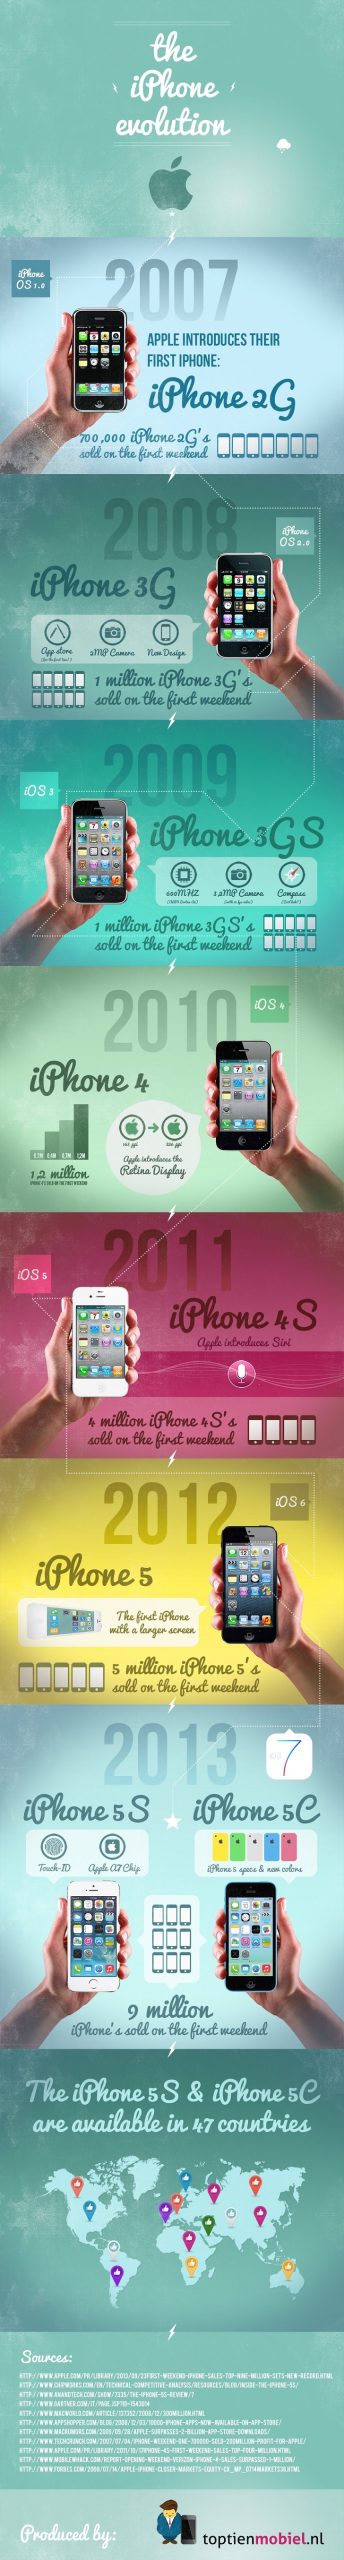 iPhone Evolution Infographic